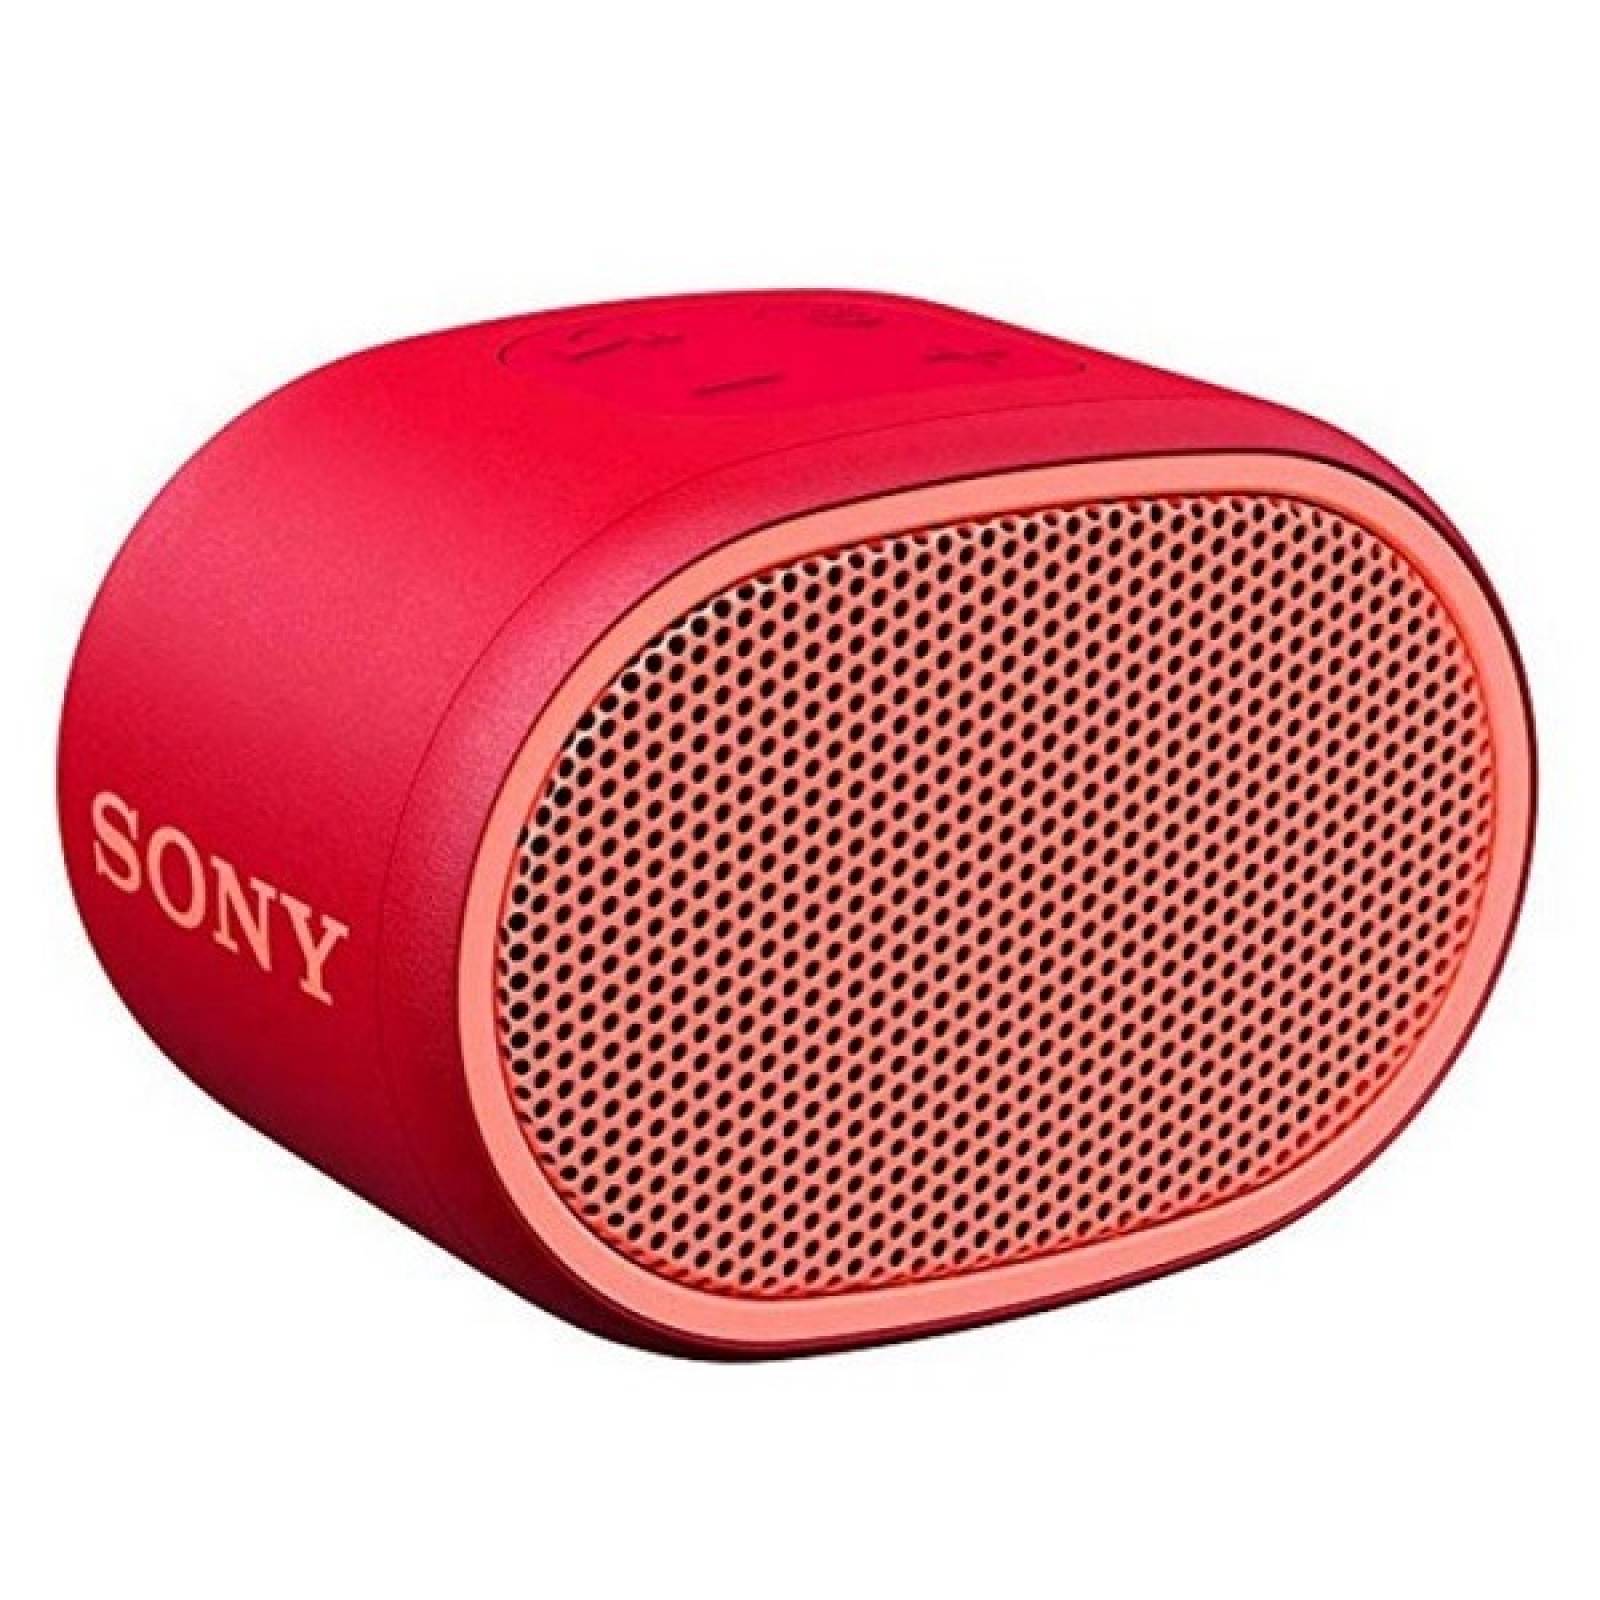 Bocina Sony Roja EXTRA BASS Bluetooth IPX5 SRS-XB01